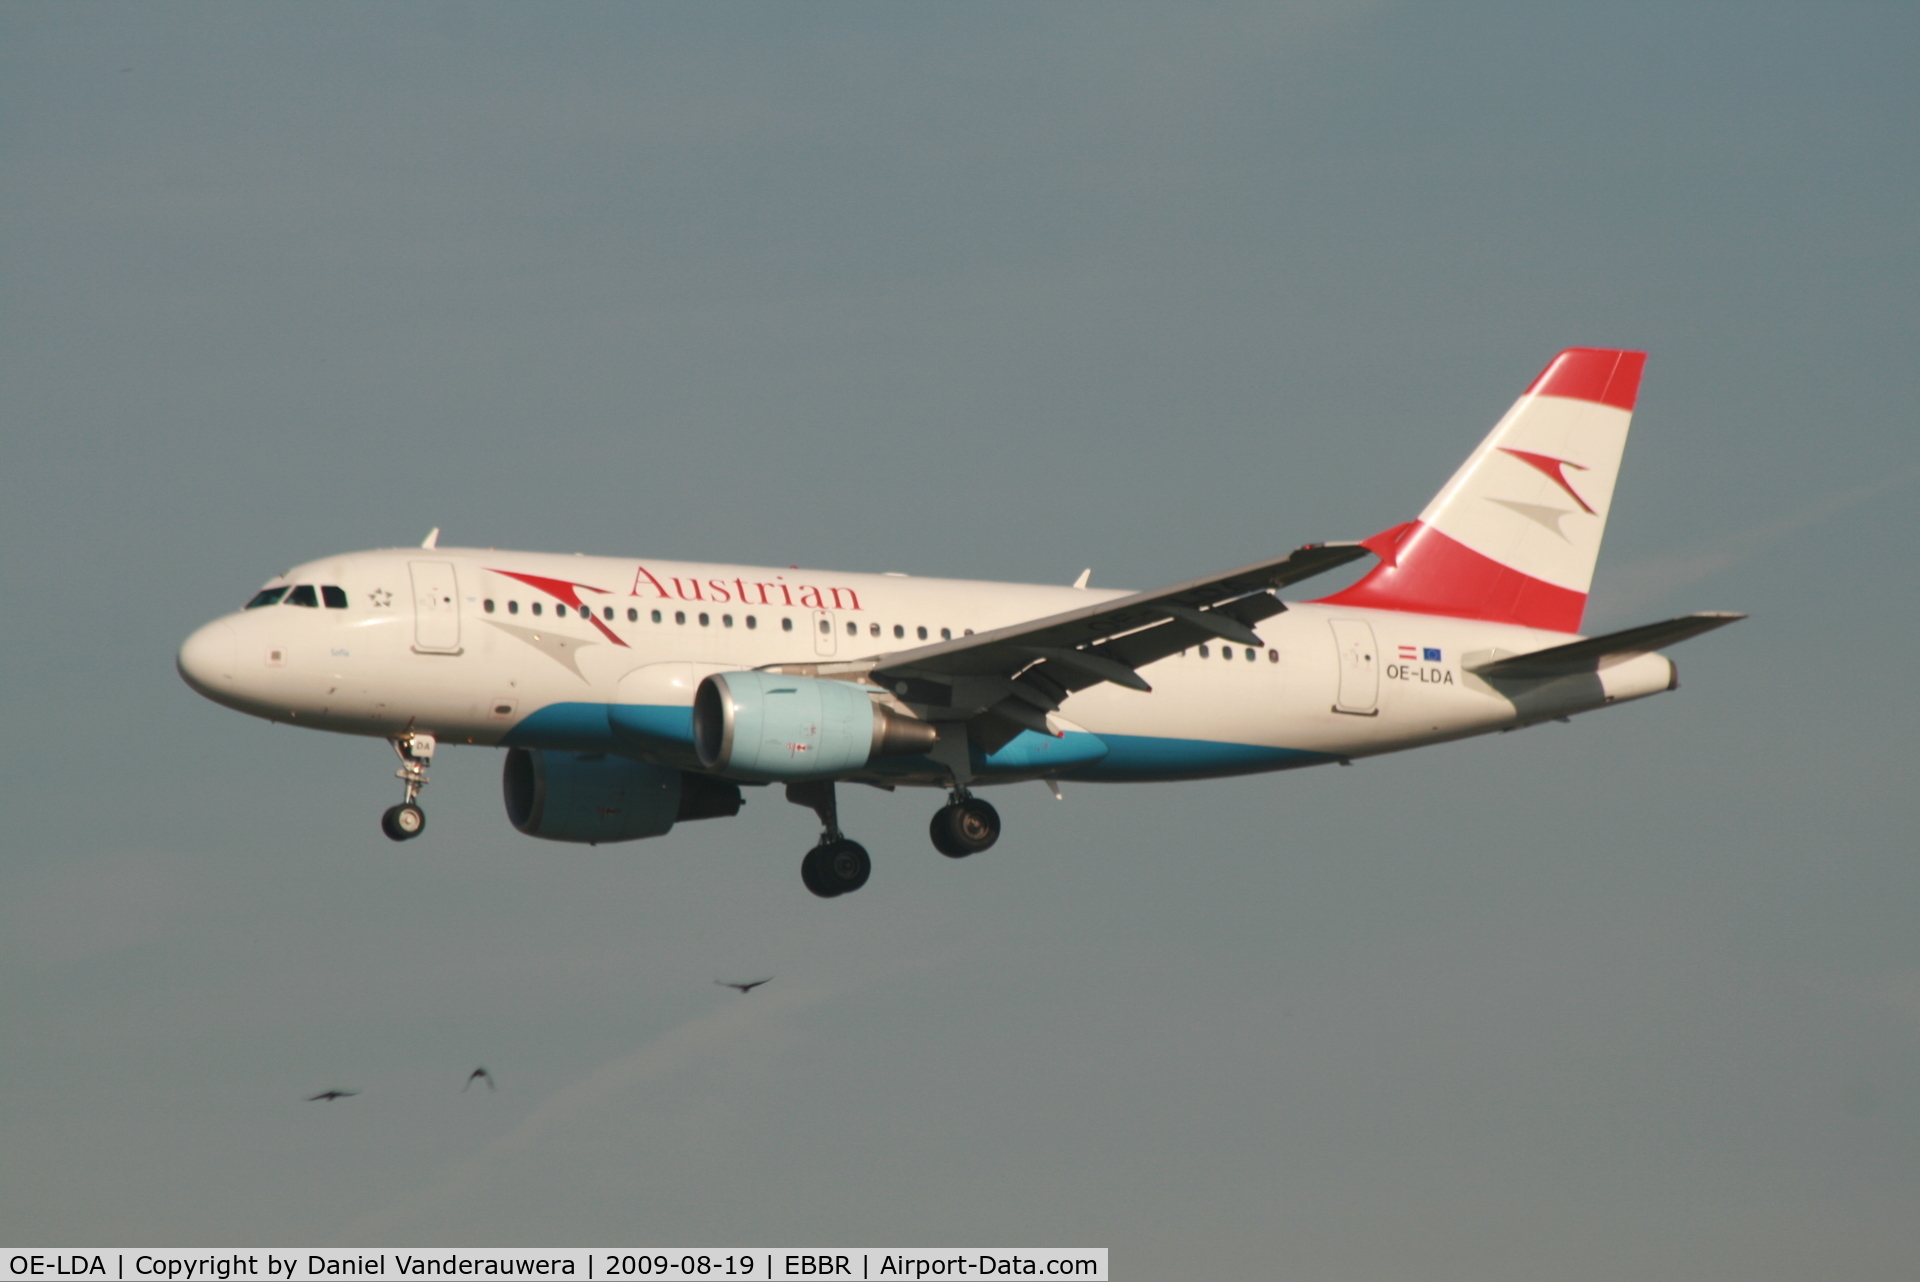 OE-LDA, 2004 Airbus A319-112 C/N 2131, flight OS351 is descending to rwy 20